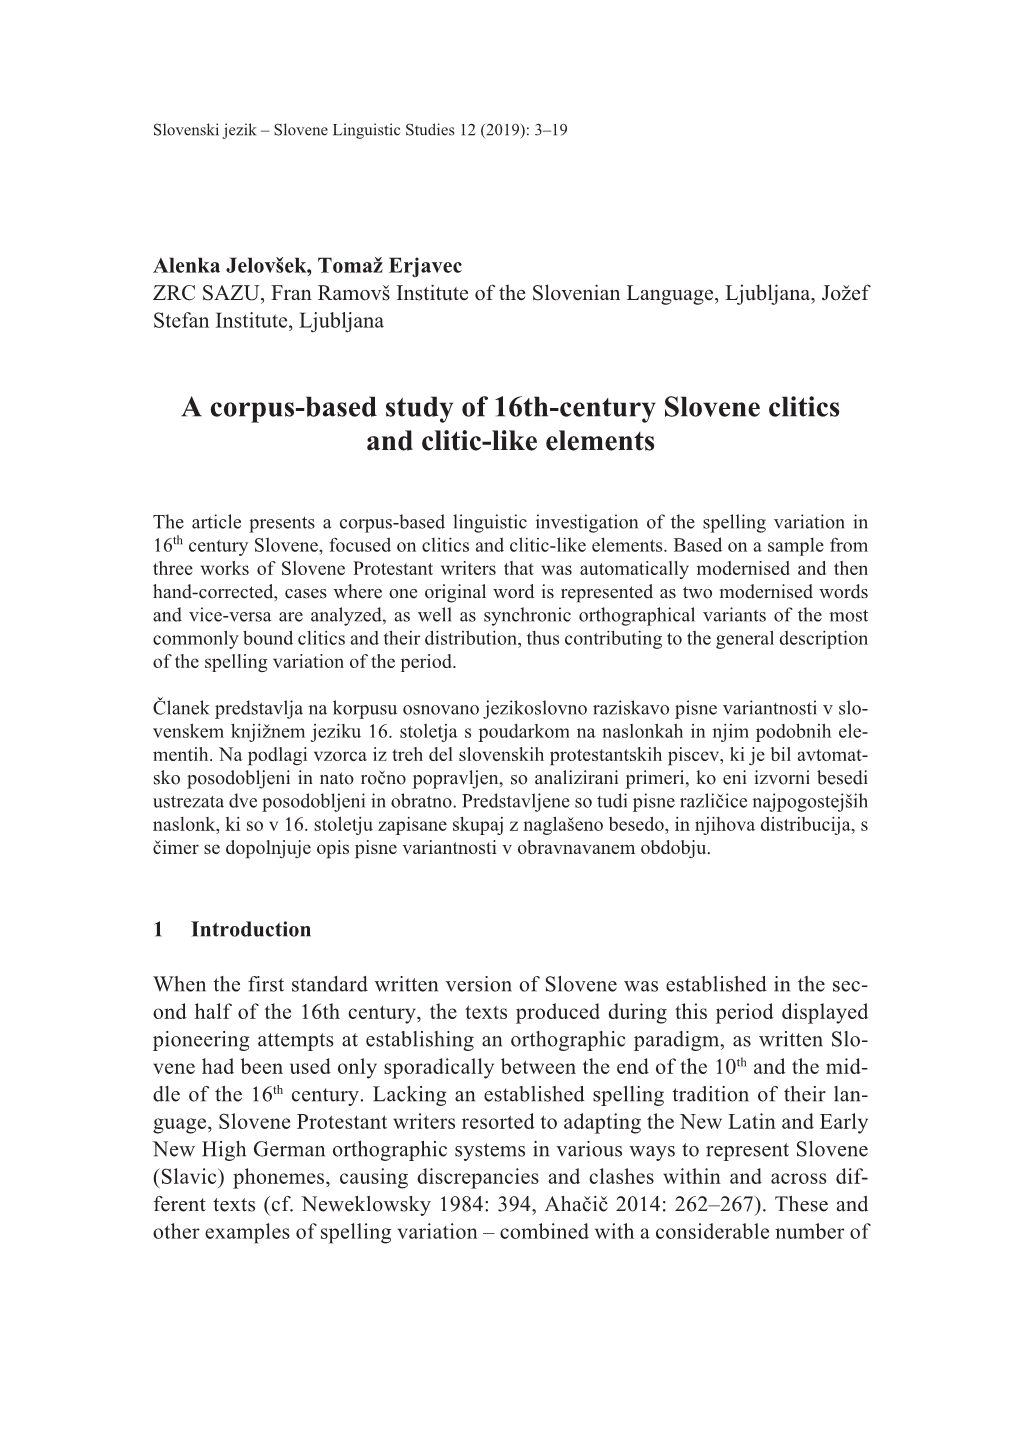 A Corpus-Based Study of 16Th-Century Slovene Clitics and Clitic-Like Elements